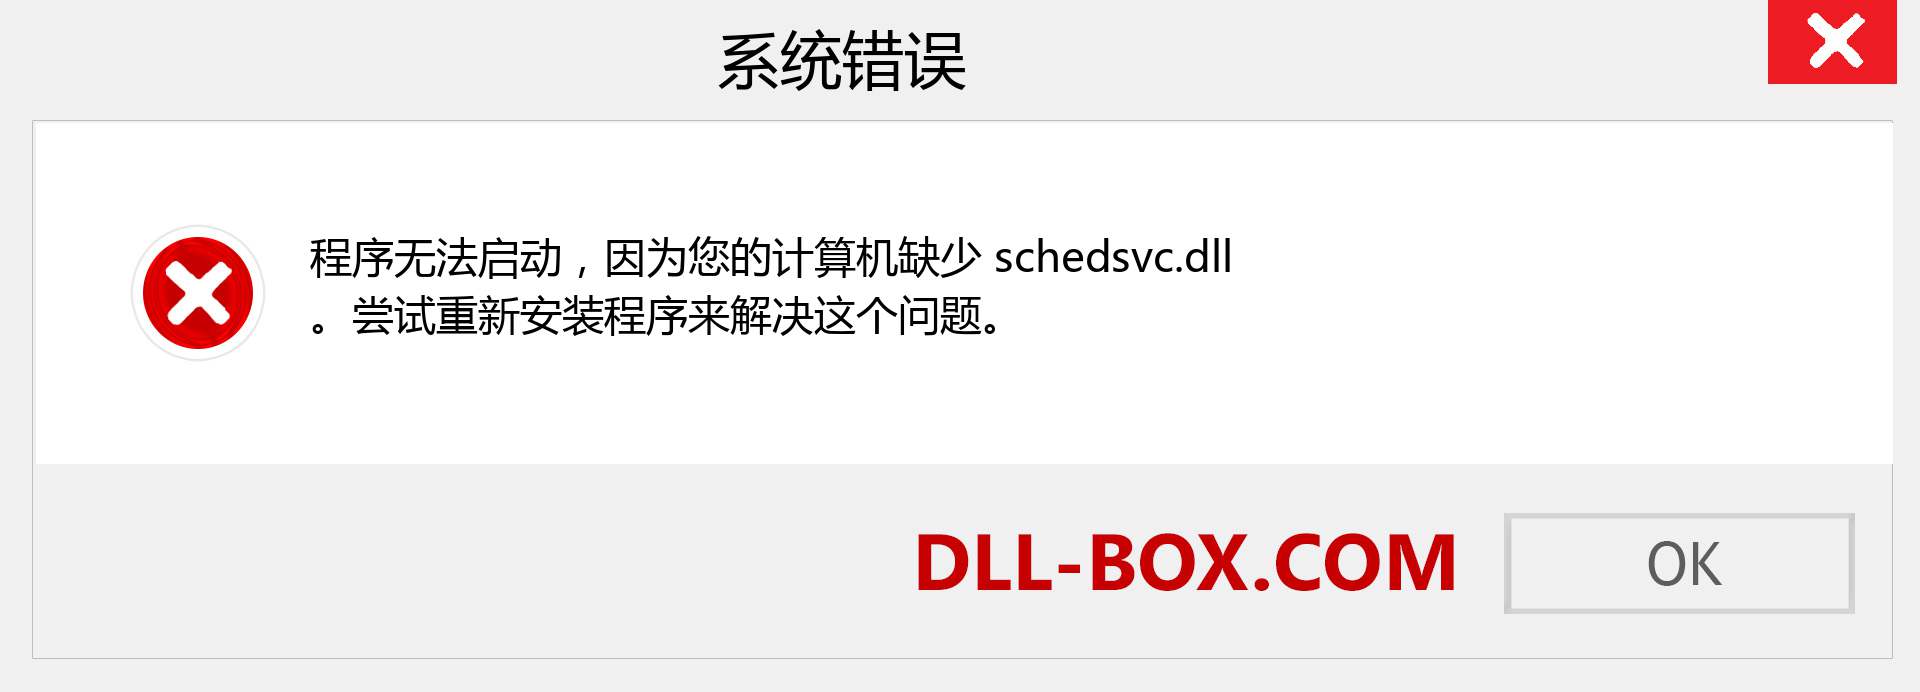 schedsvc.dll 文件丢失？。 适用于 Windows 7、8、10 的下载 - 修复 Windows、照片、图像上的 schedsvc dll 丢失错误